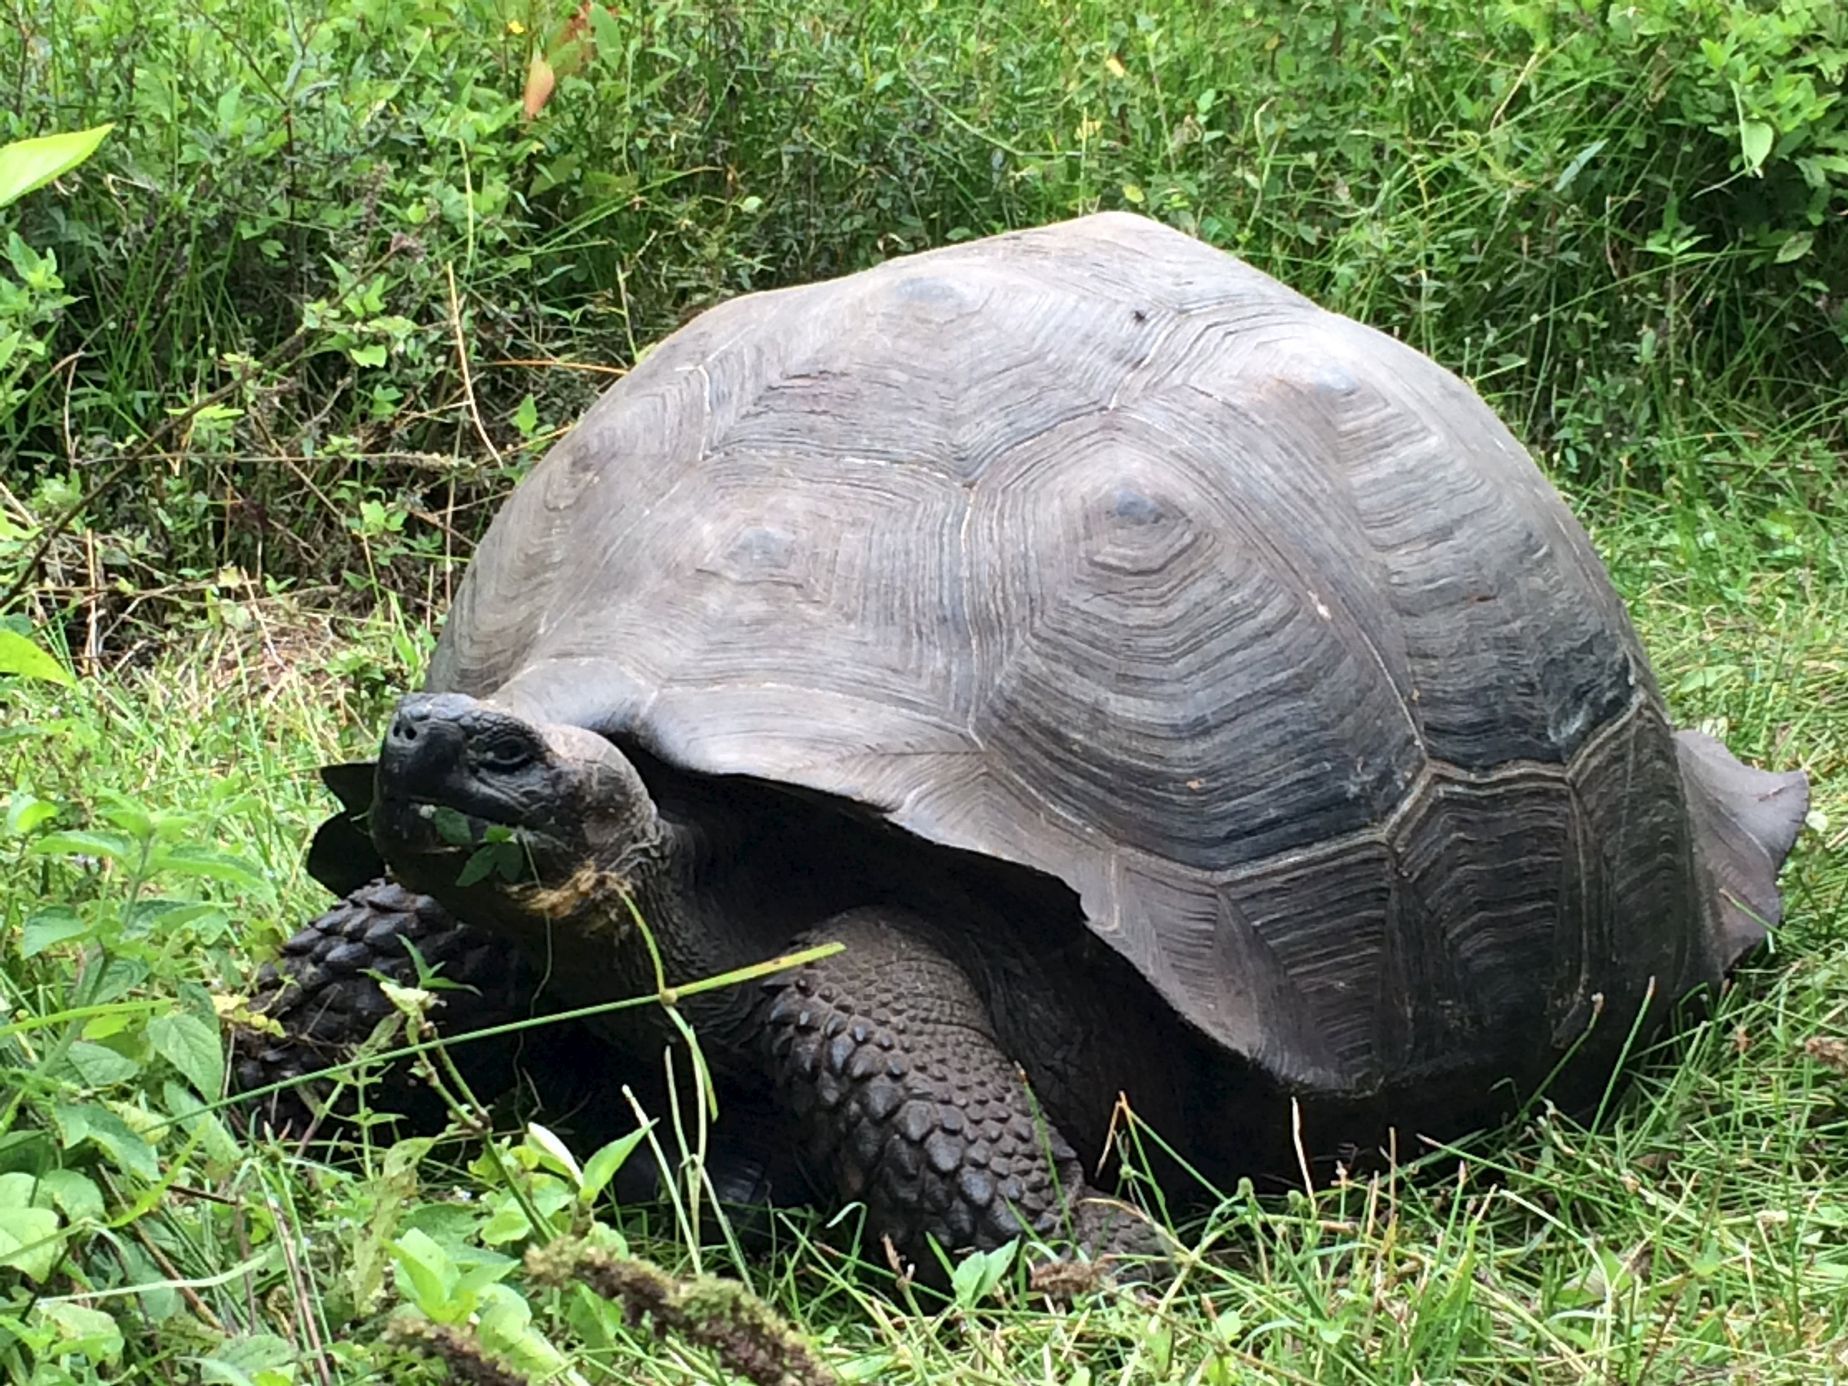 An Eastern Santa Cruz tortoise is pictured on Santa Cruz Island